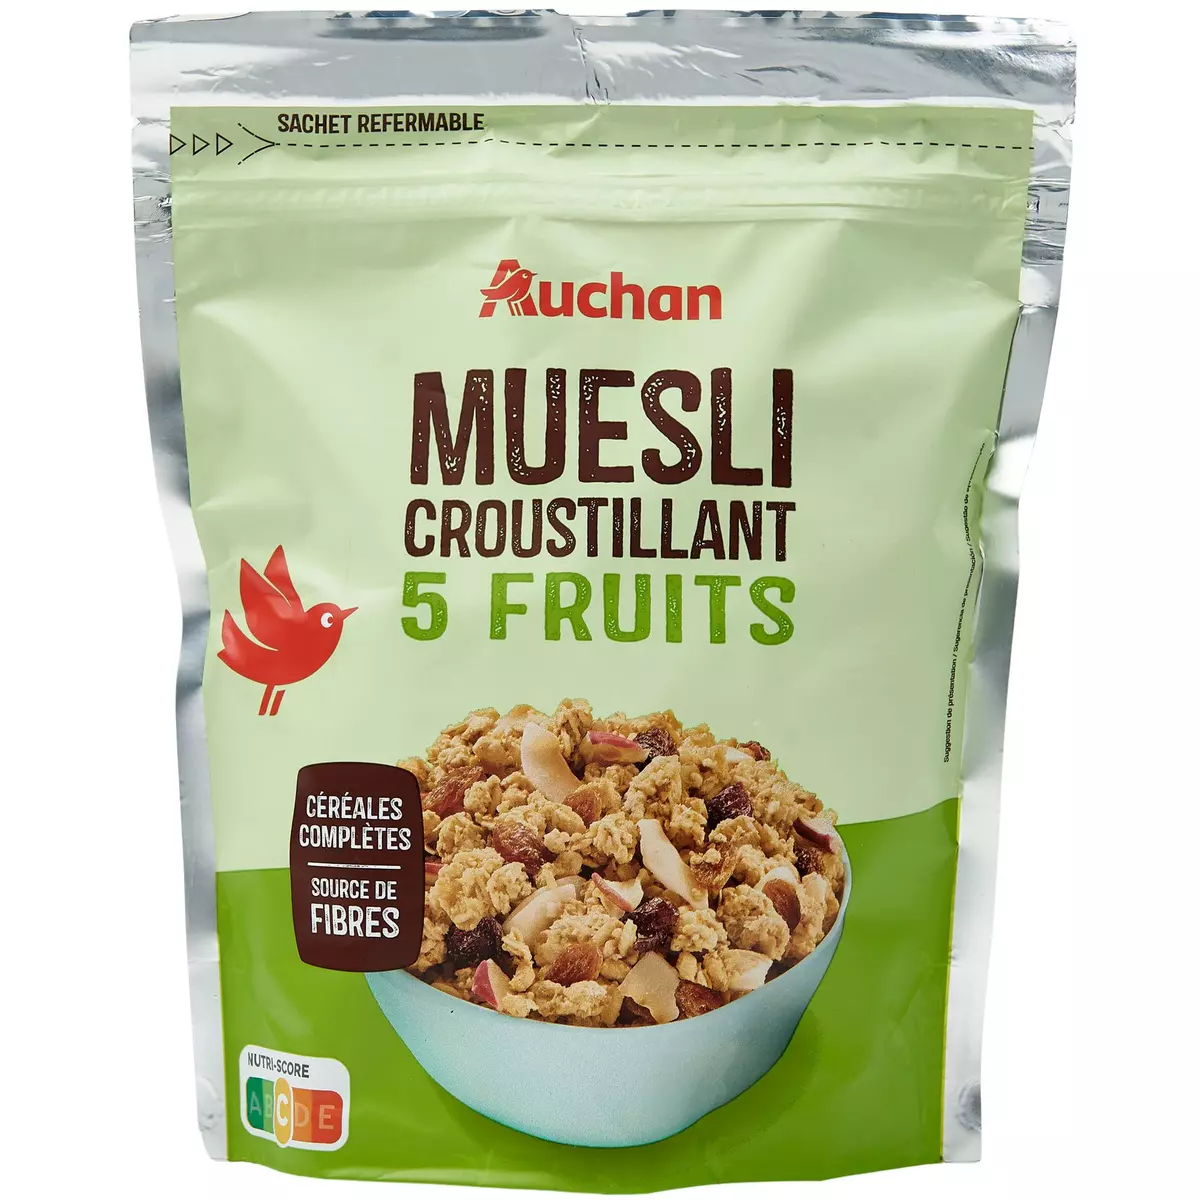 AUCHAN Muesli croustillant 5 fruits 450g